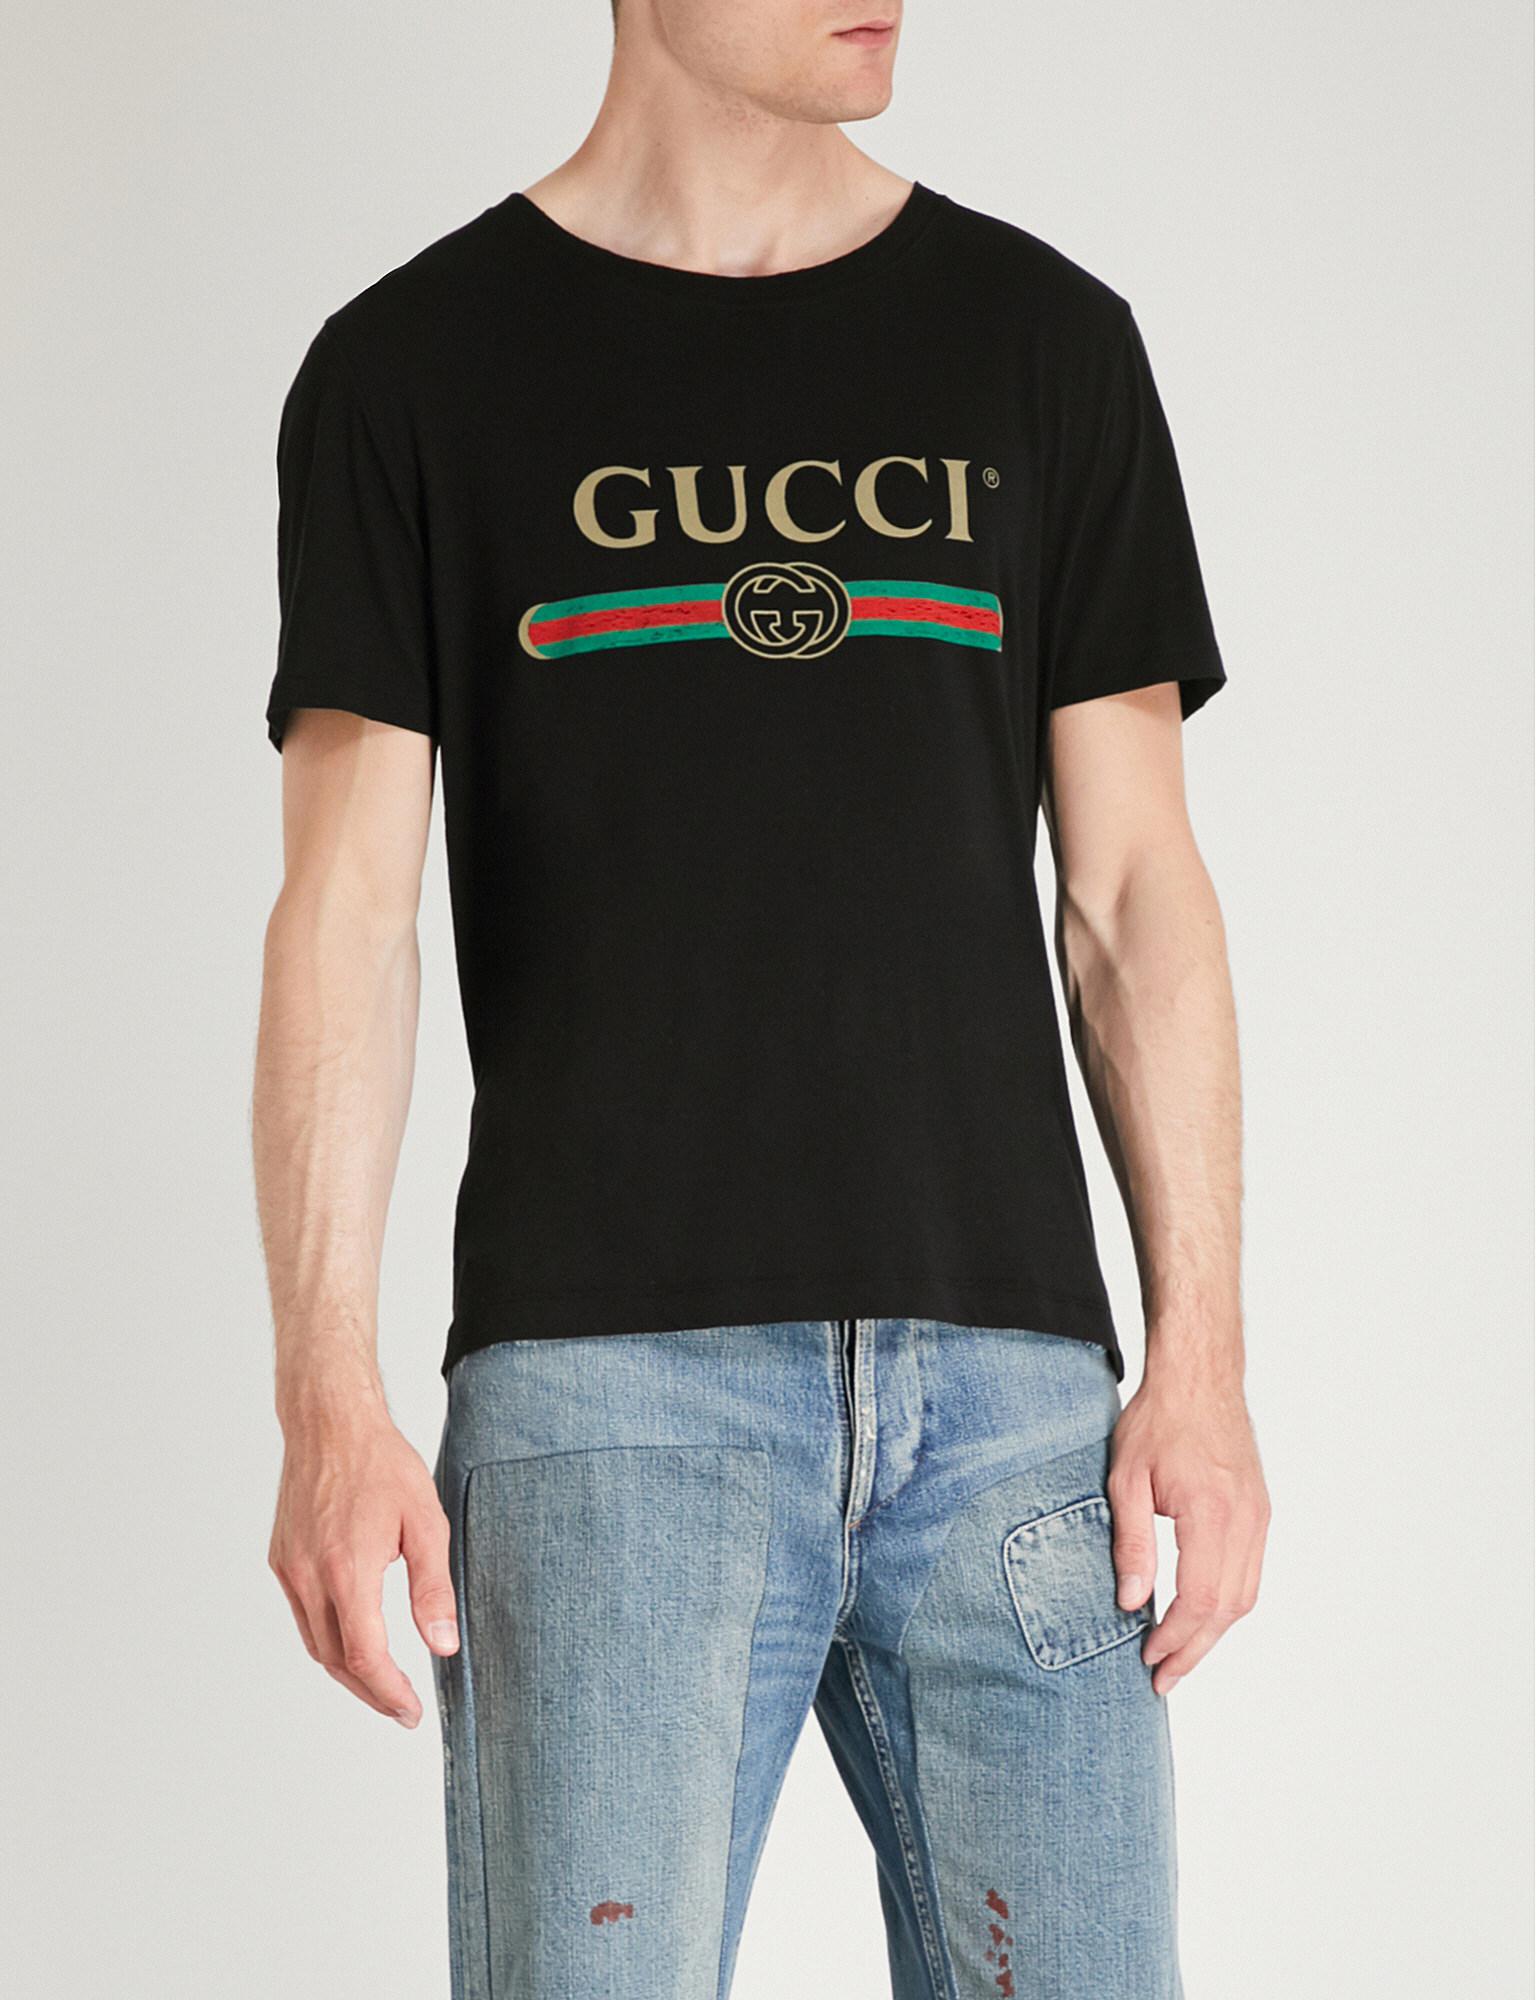 gucci first copy shirts